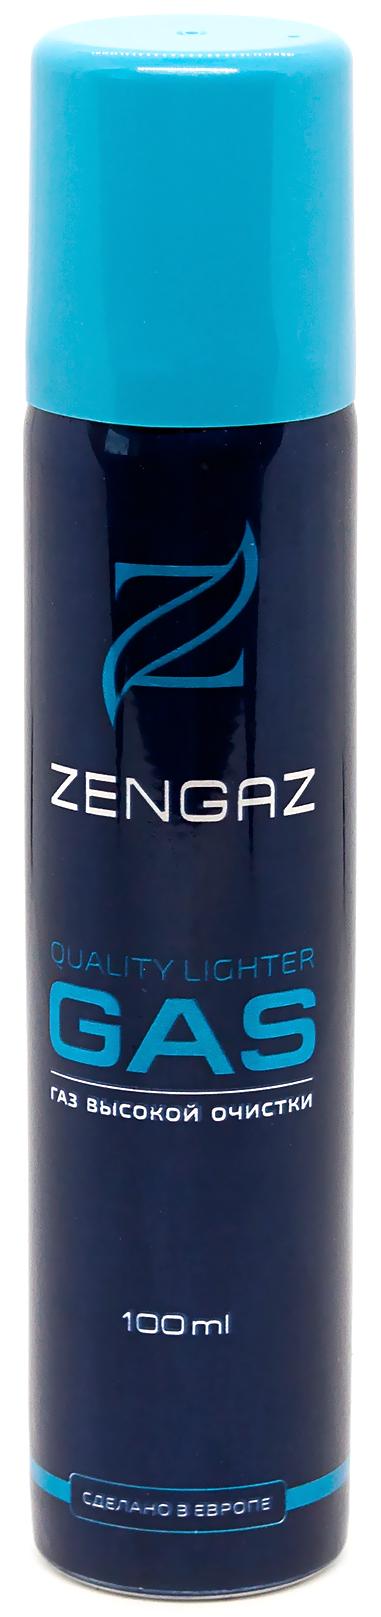 Баллон газовый Zengaz Gaz 100 Ml White Zg-100